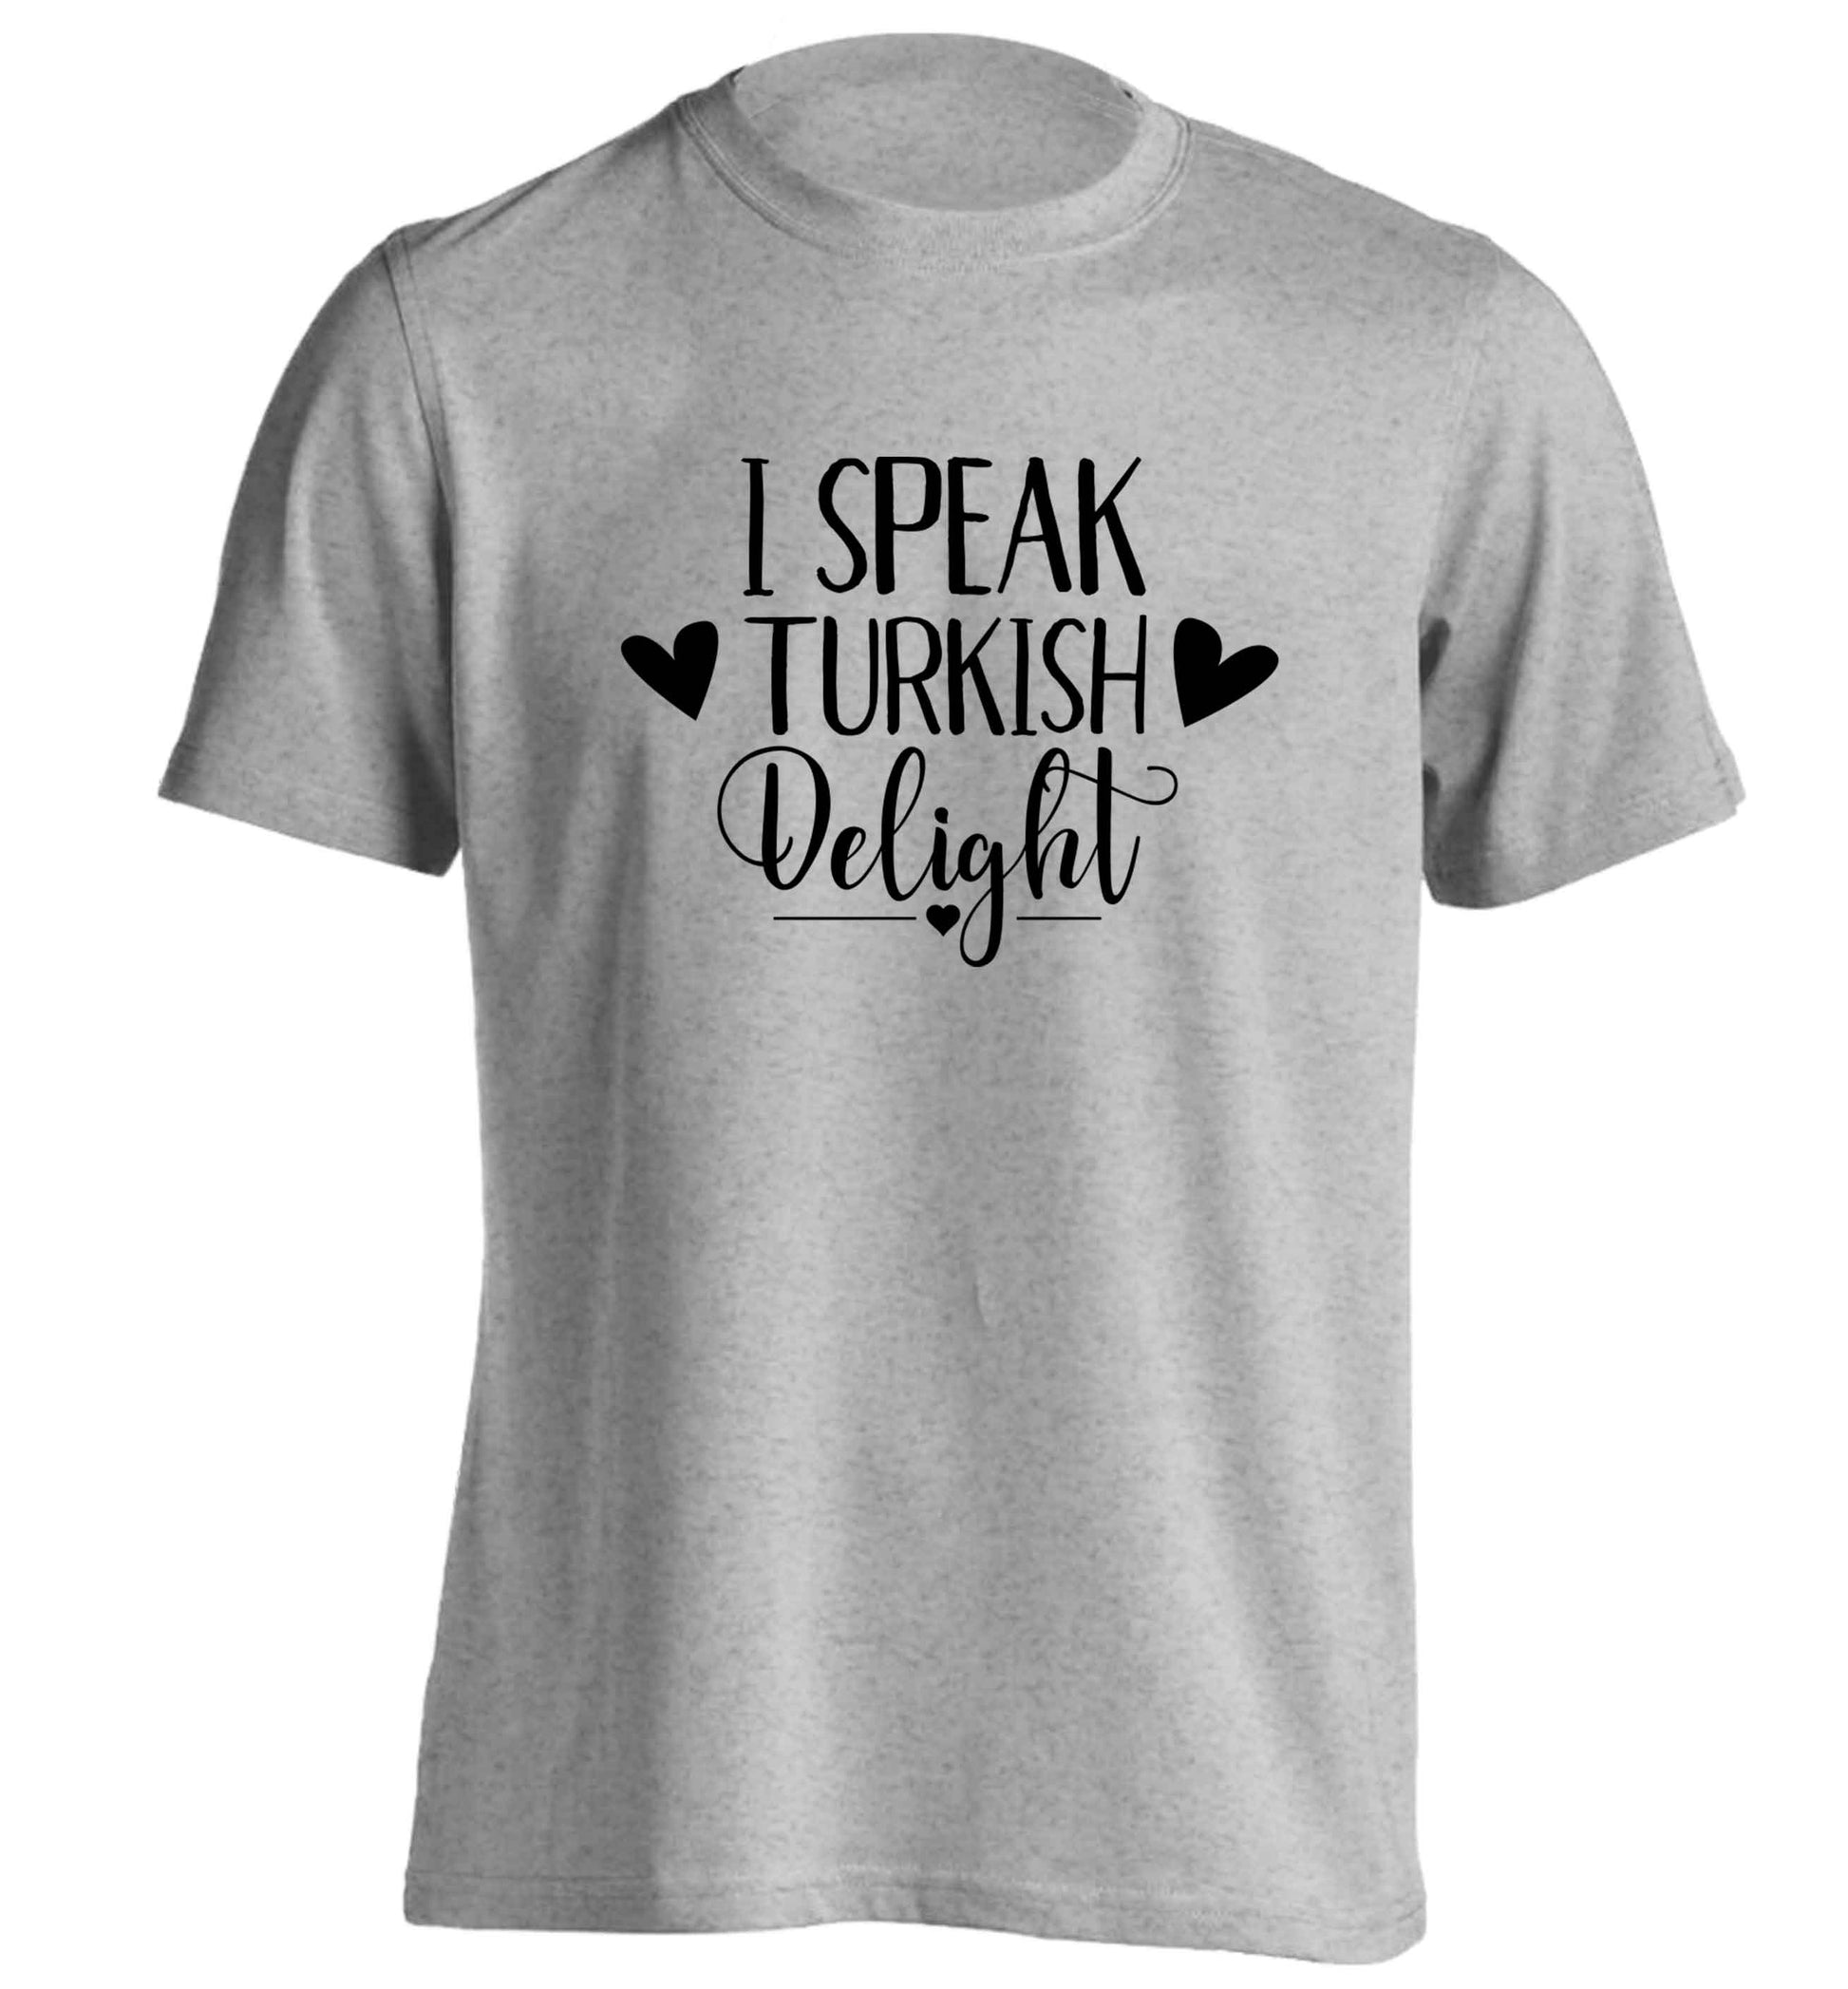 I speak turkish...delight adults unisex grey Tshirt 2XL